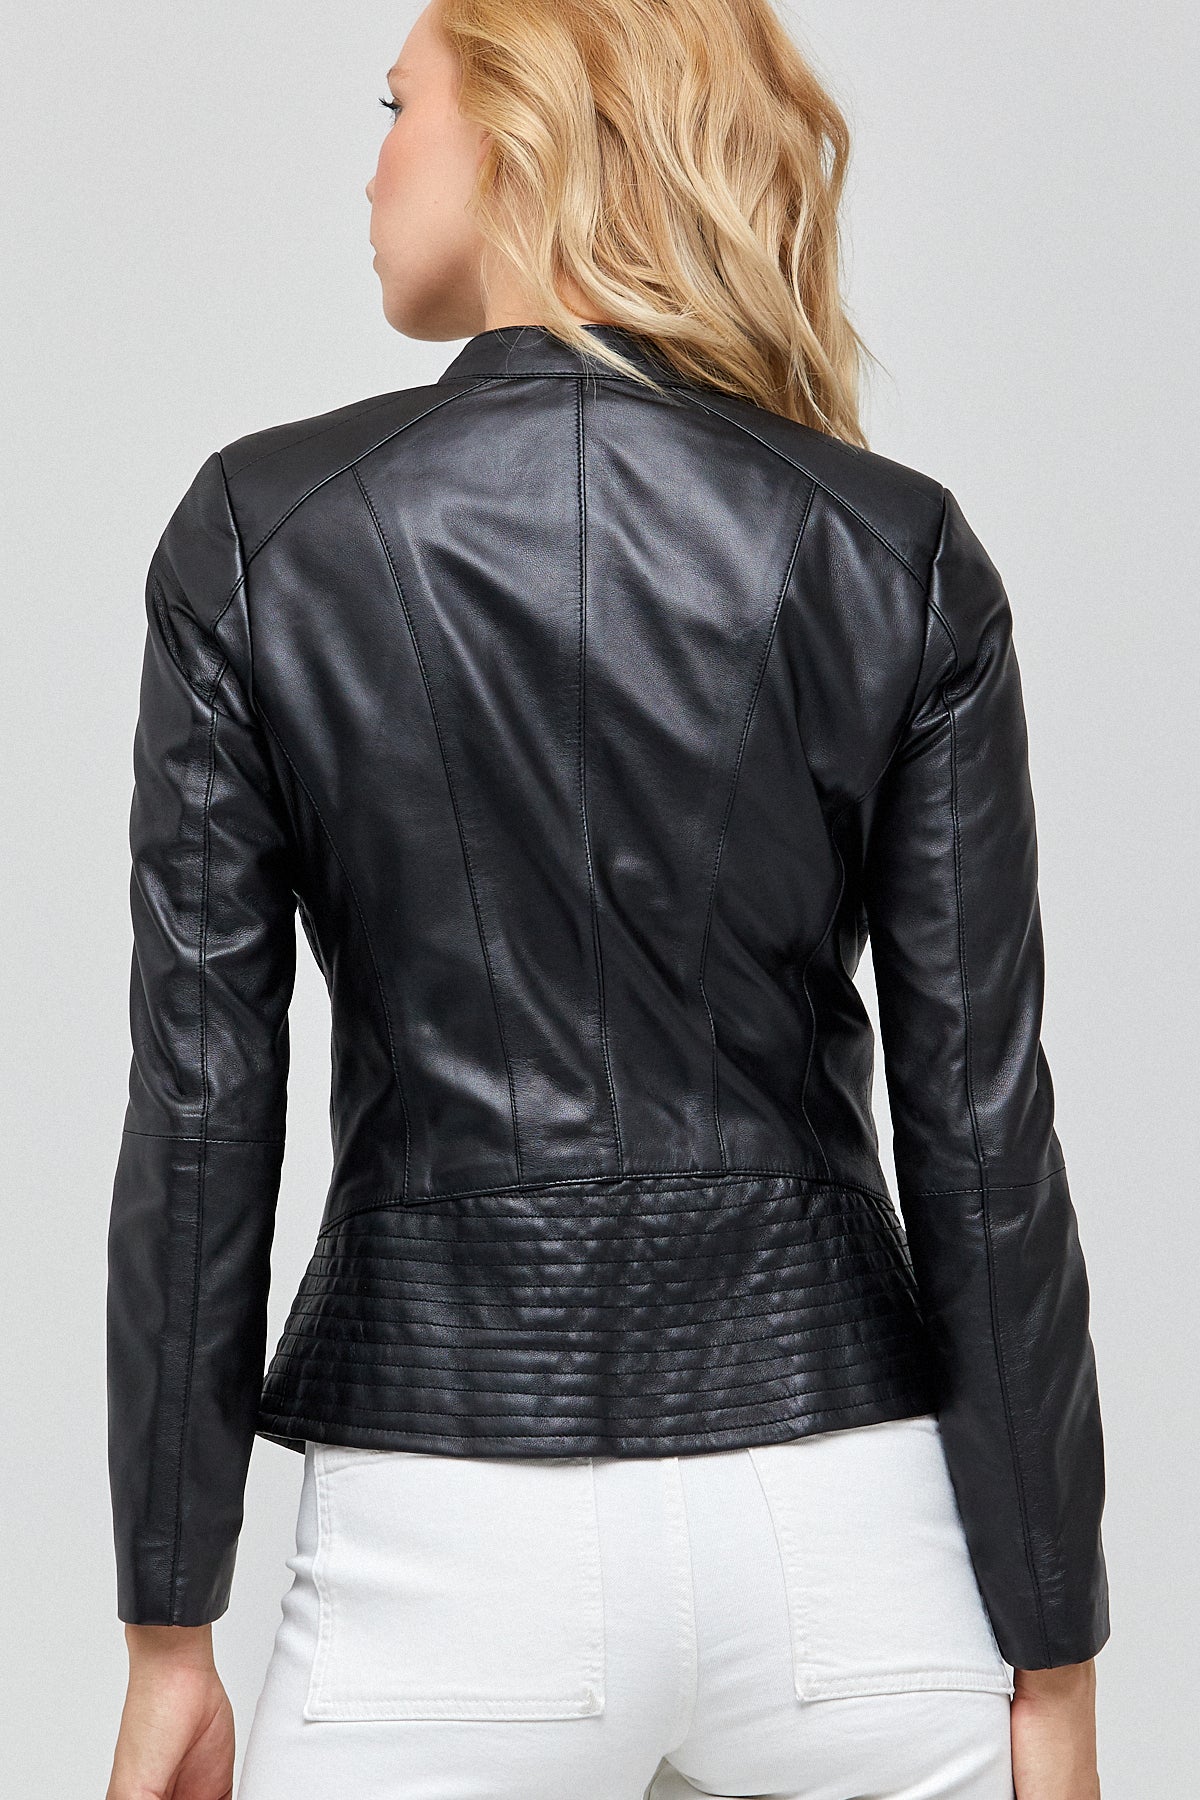 Lucky Women's Black Leather Jacket